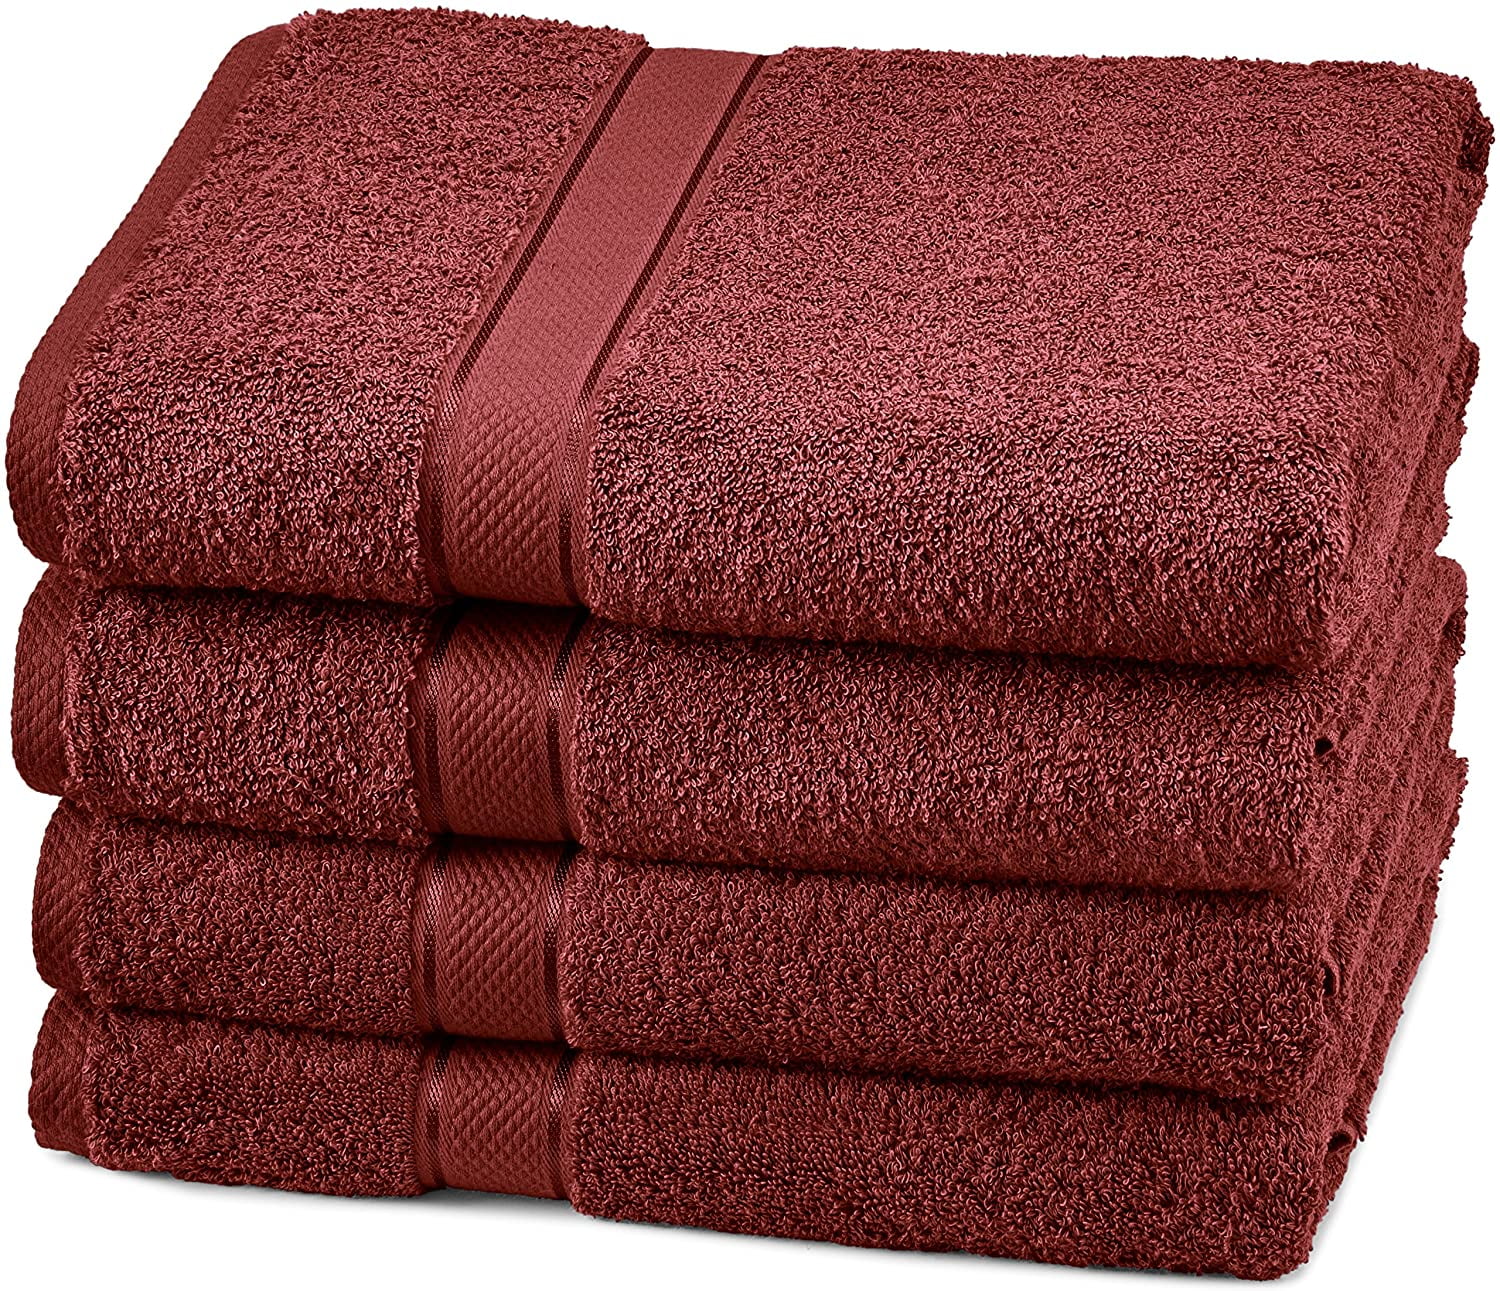 QUALITY Egyptian Cotton Soft Towels  6 Piece Bath & Hand Luxury Set Cranberry 